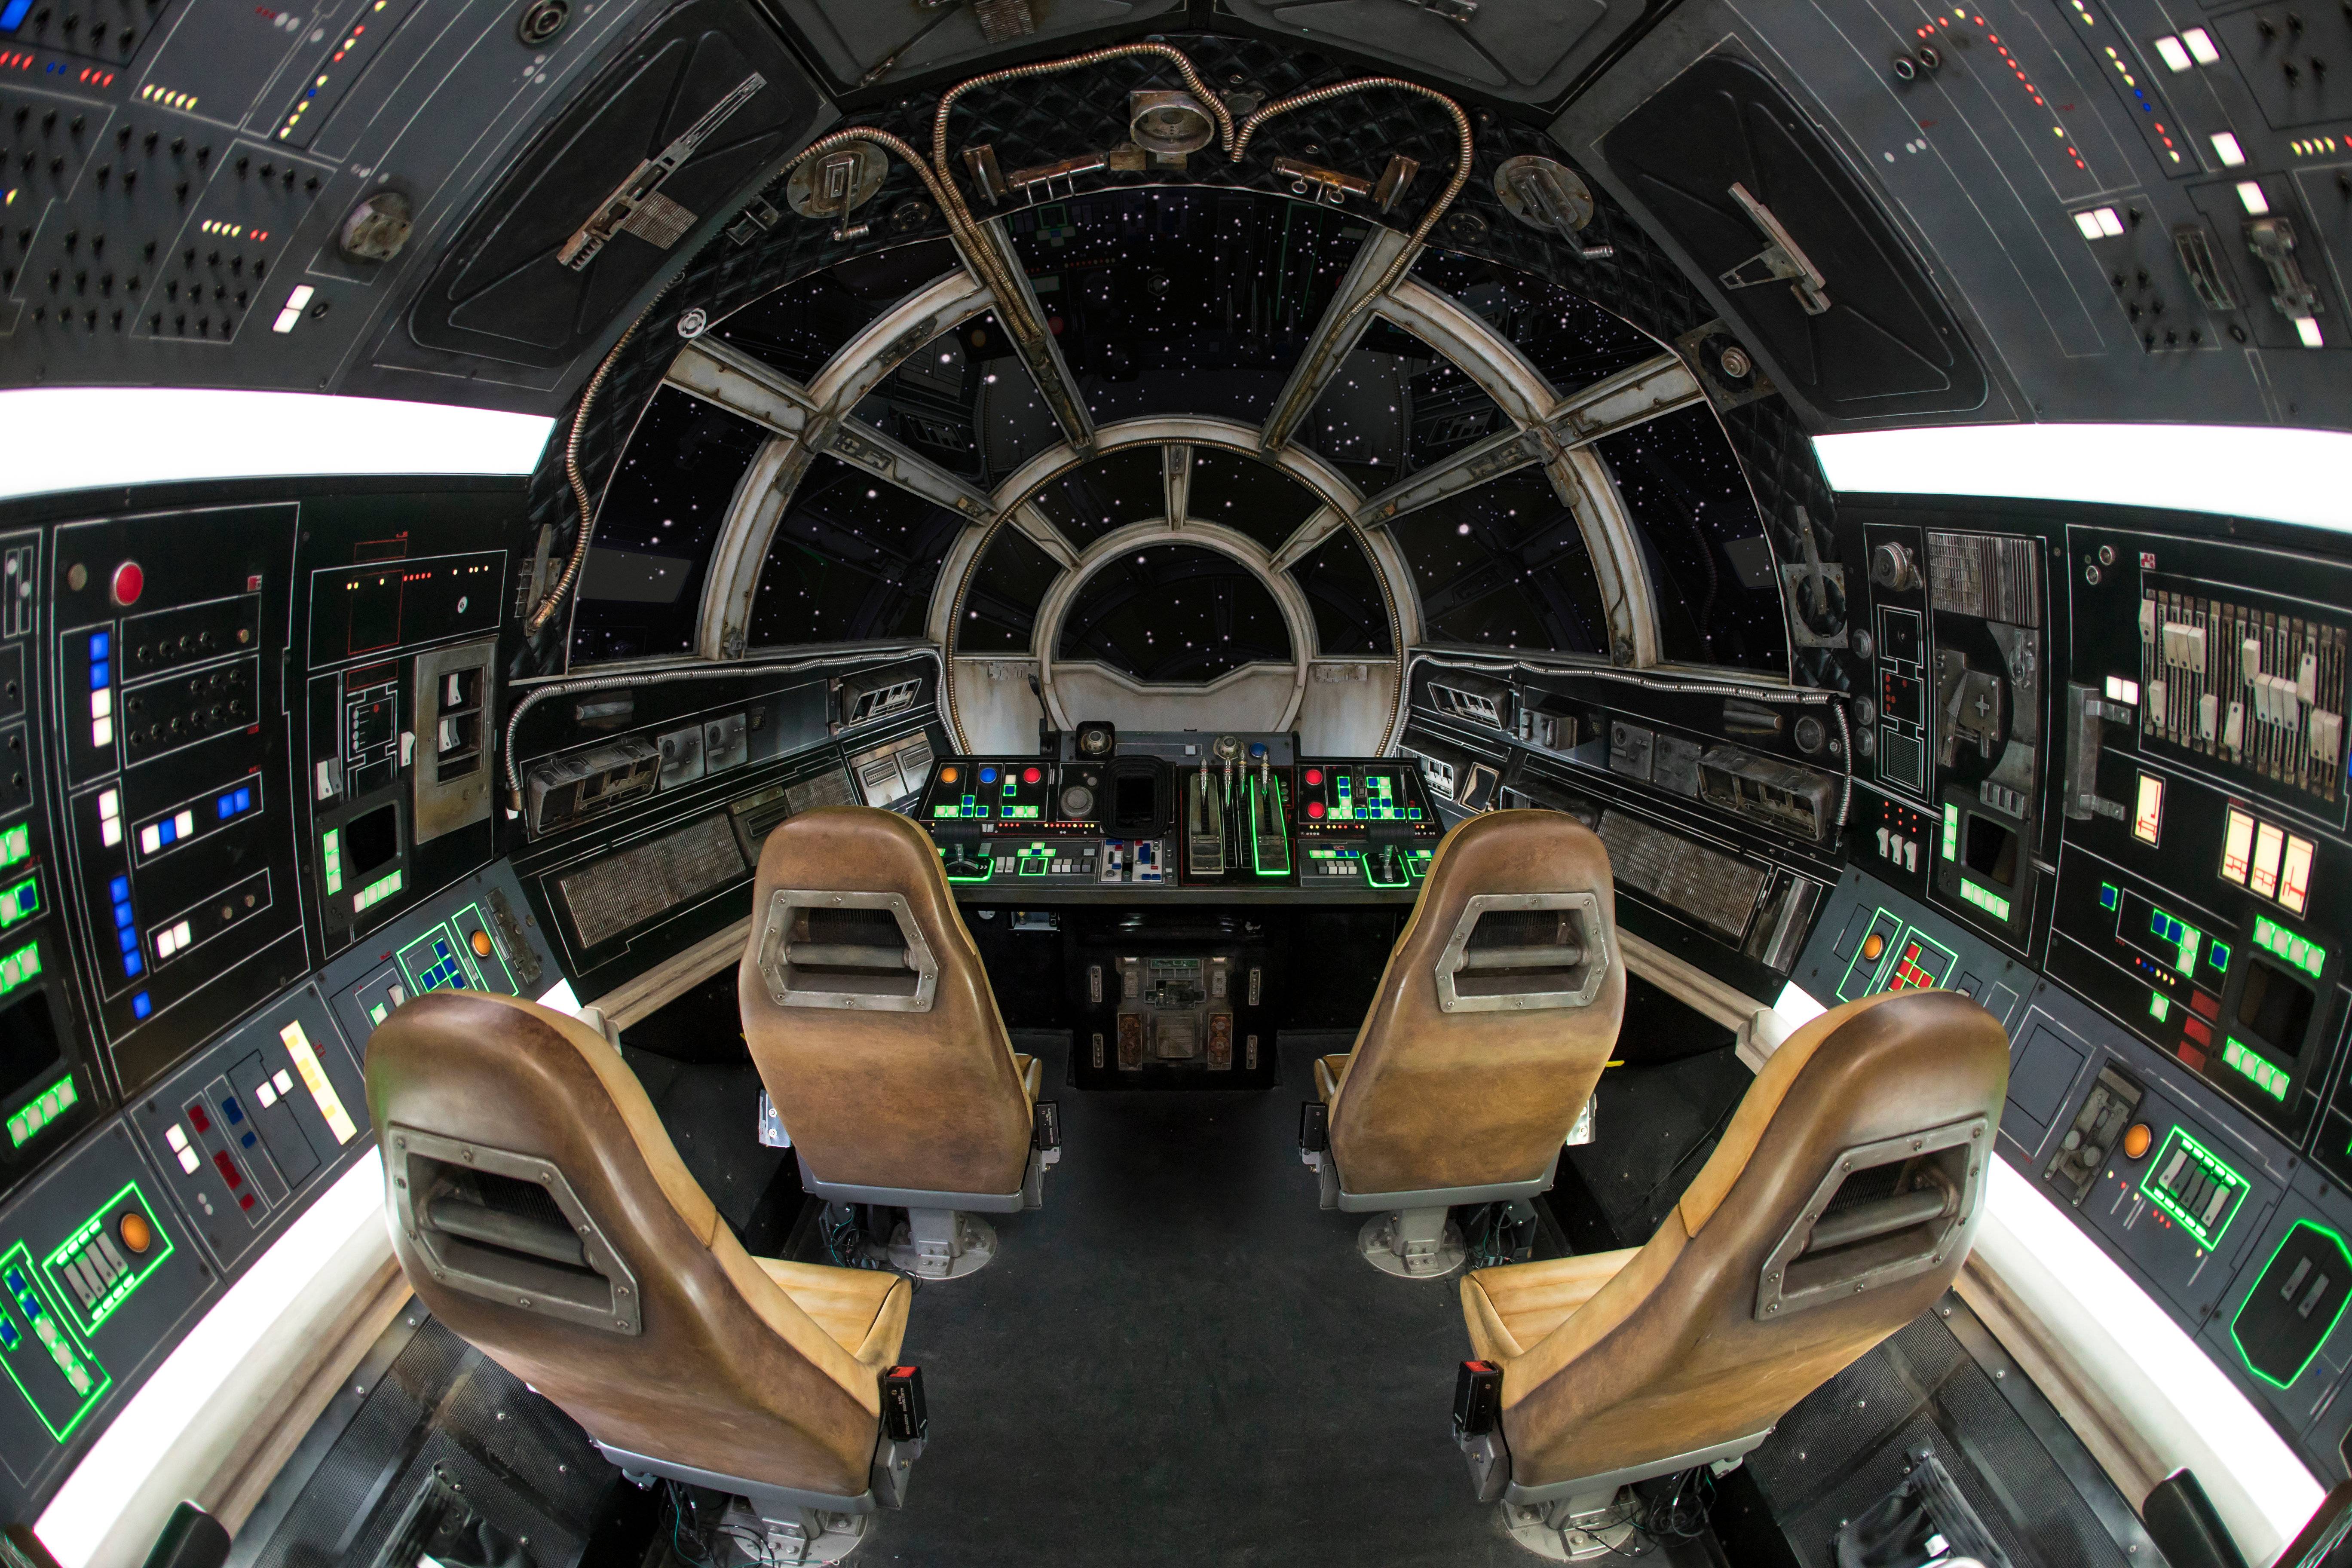 The cockpit of Millennium Falcon Smugglers Run